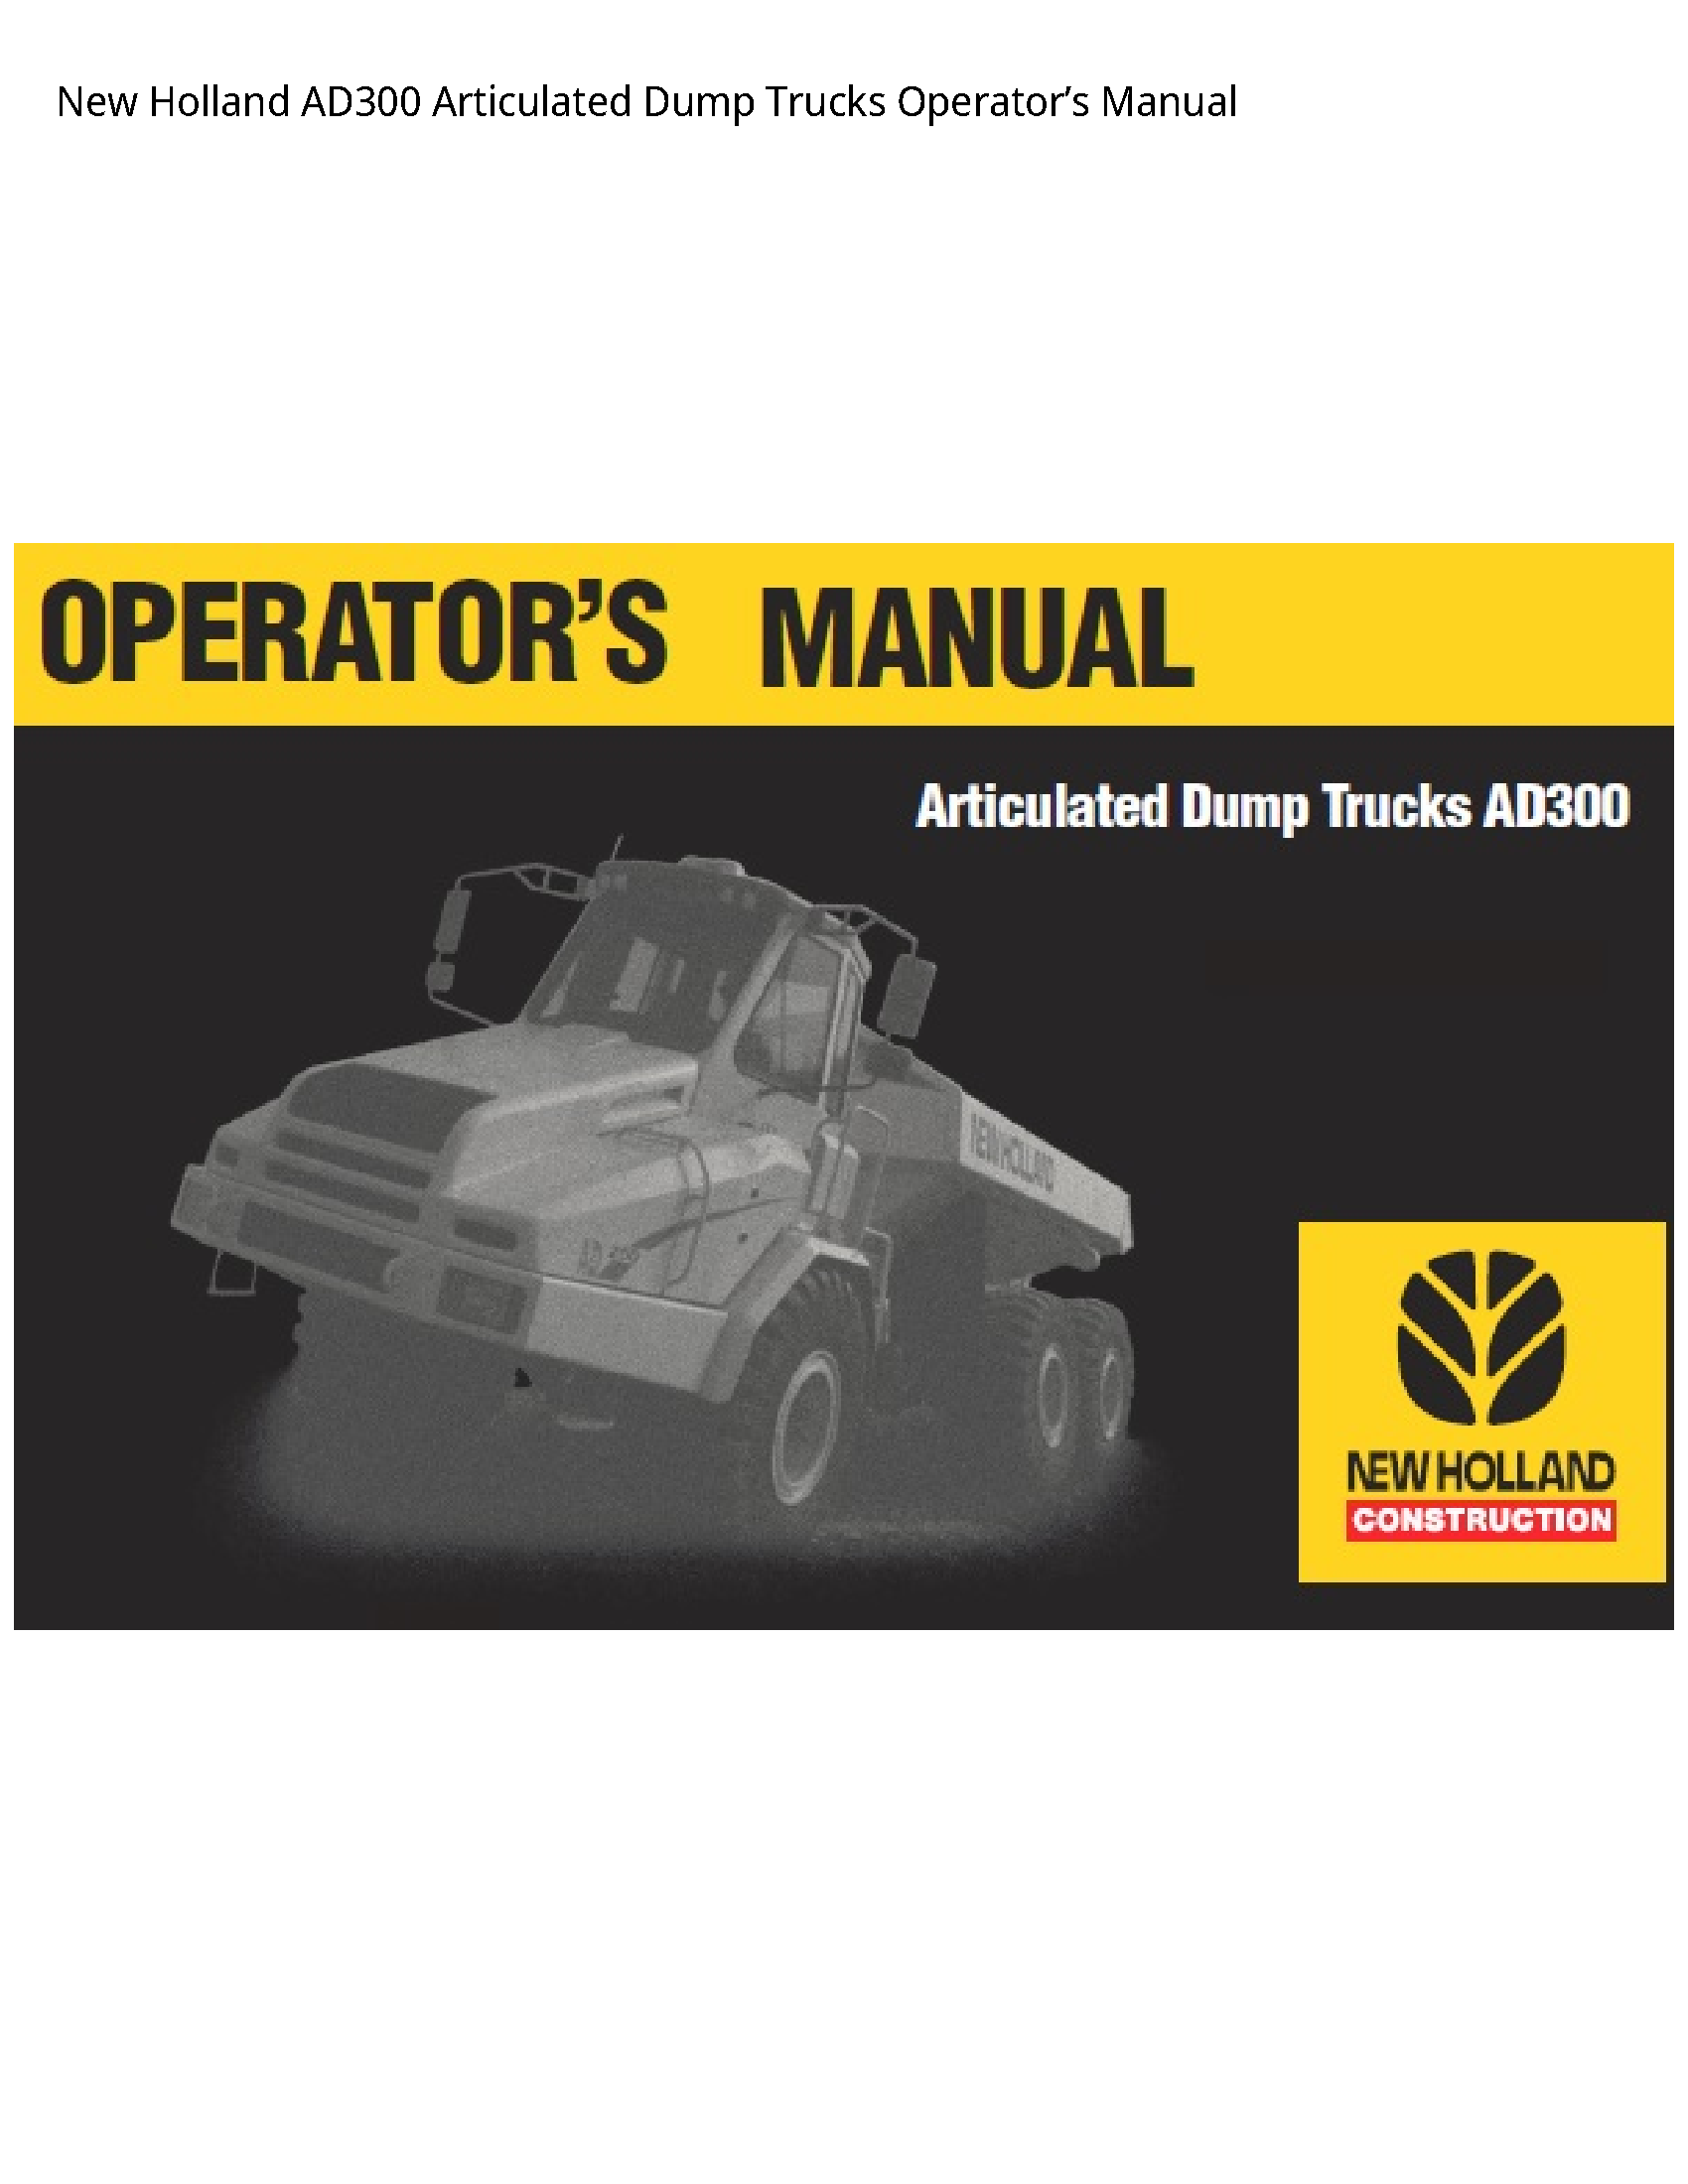 New Holland AD300 Articulated Dump Trucks Operator’s manual